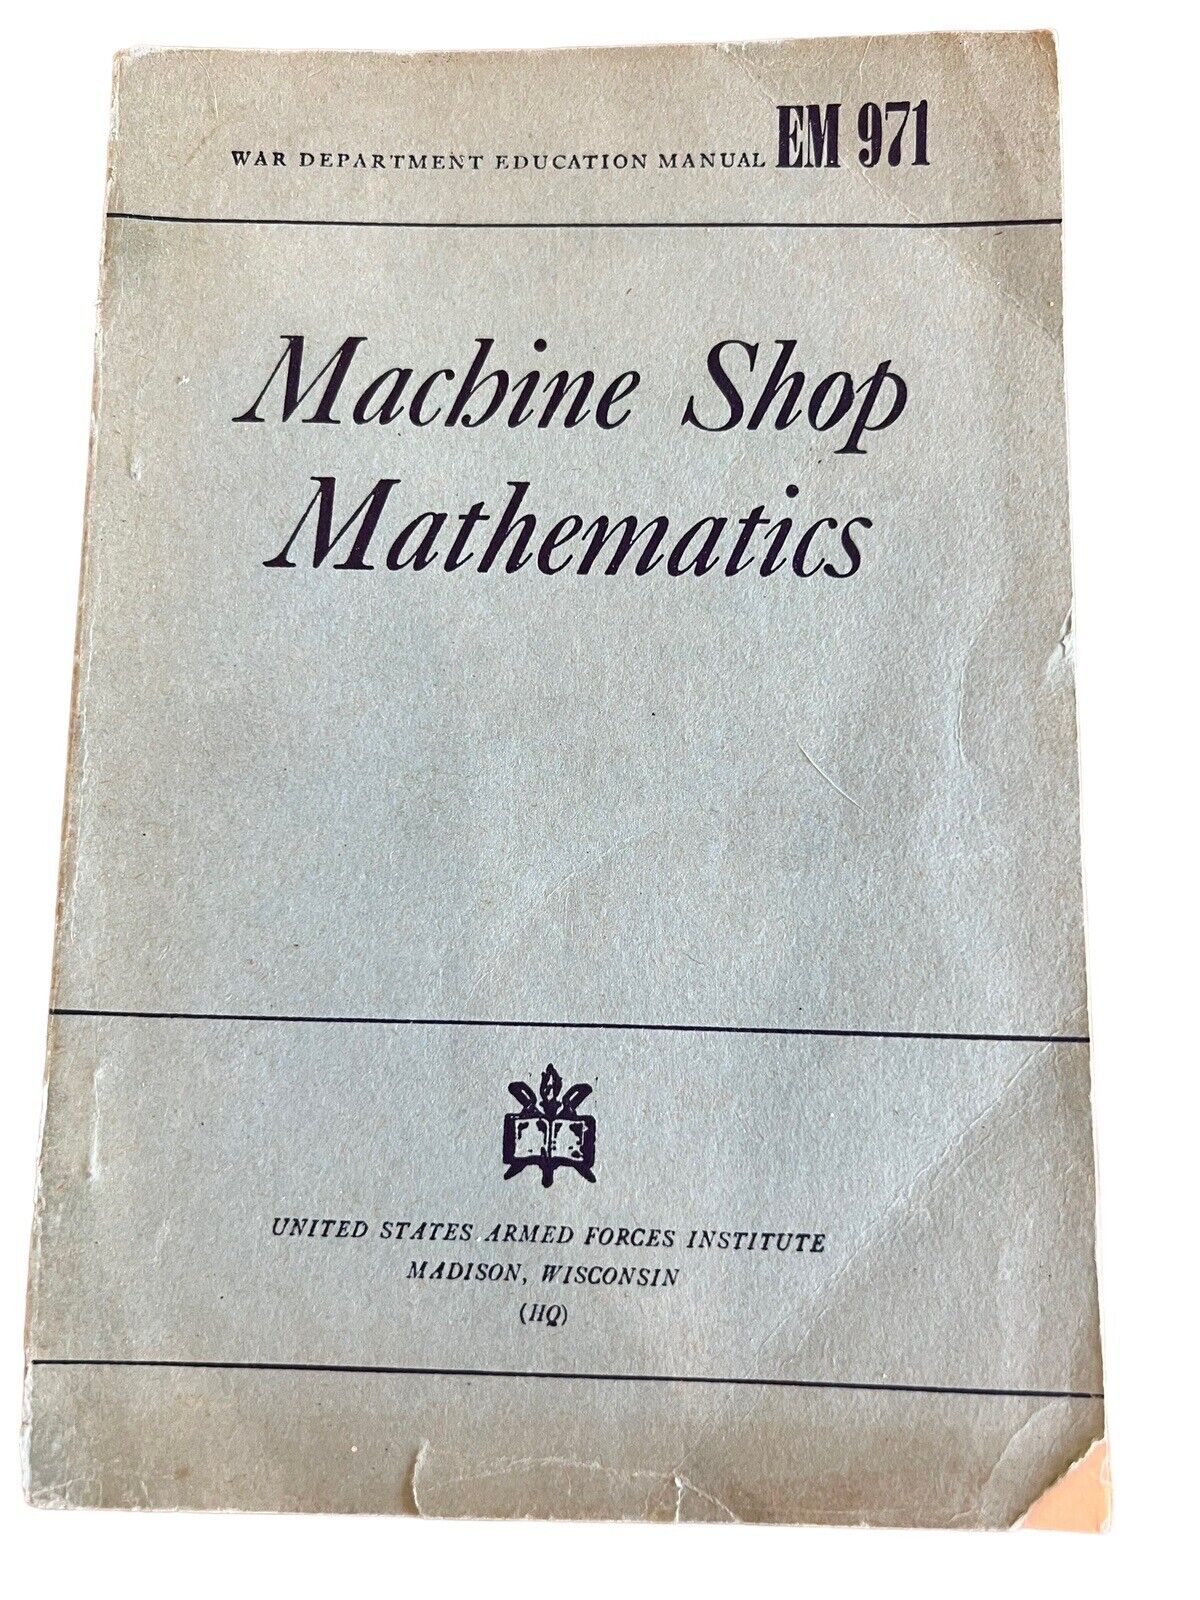 Machine Shop Mathematics War Department Education Manual EM 971 1944